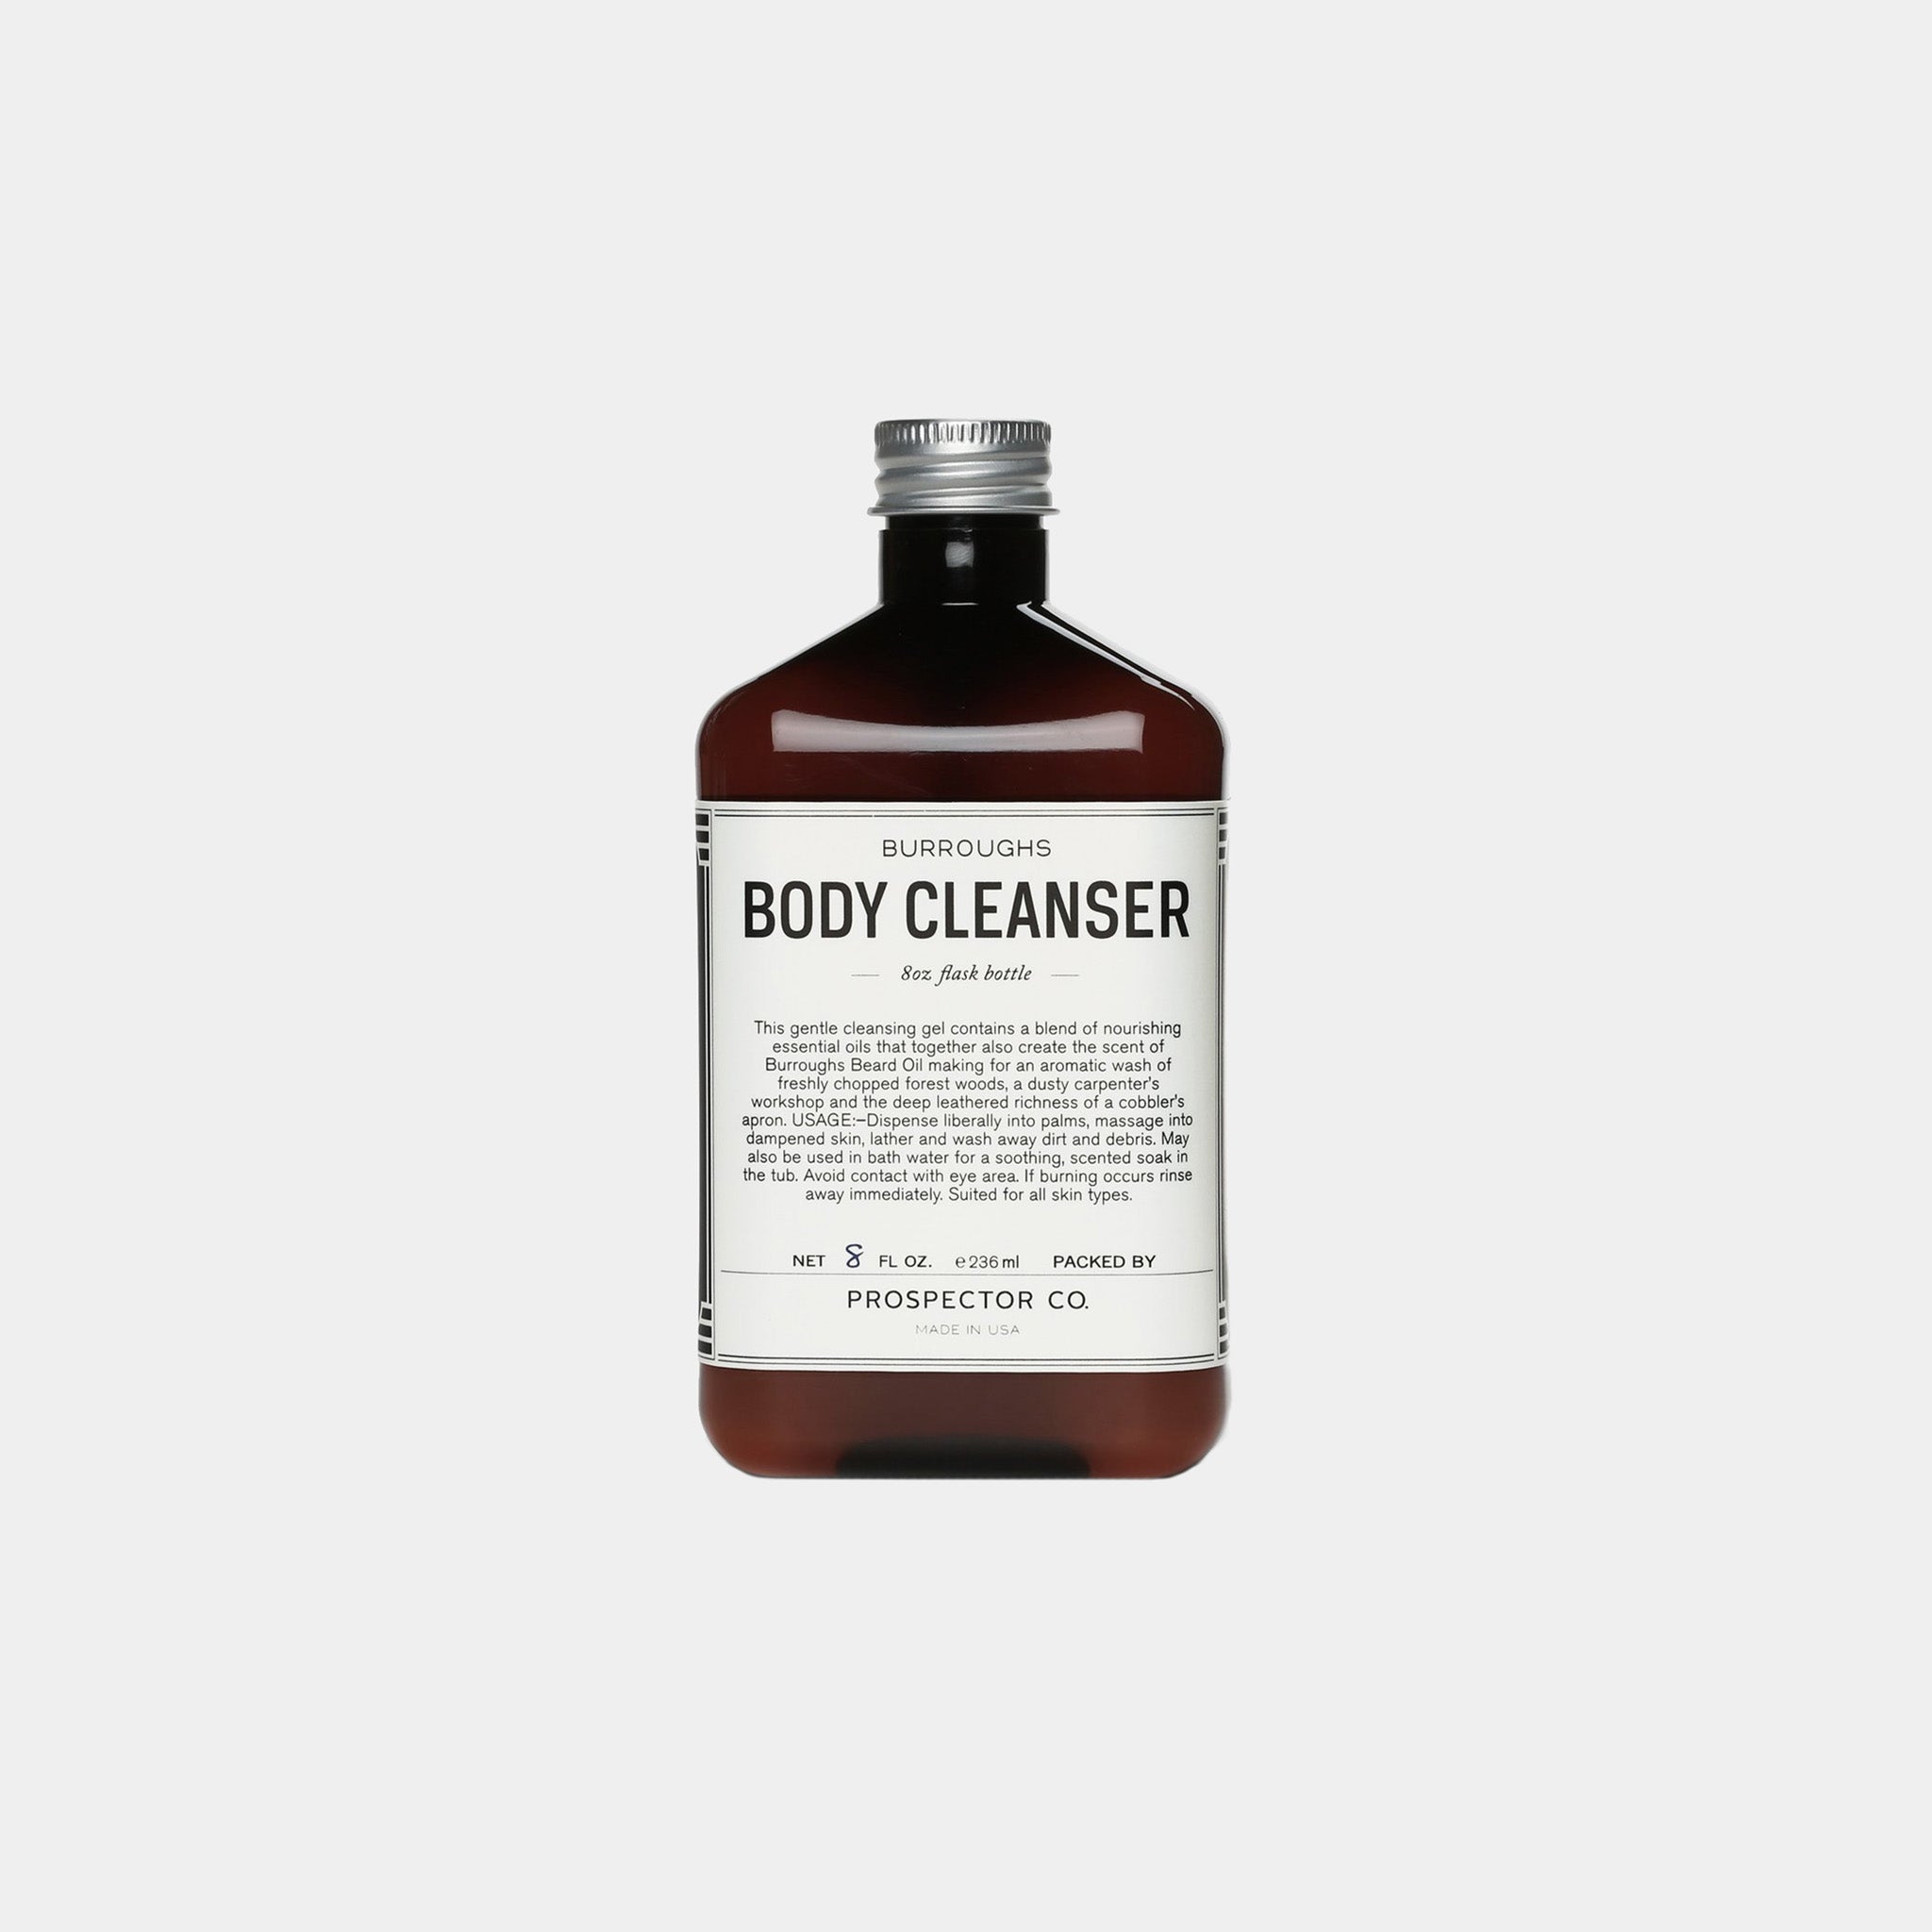 Burroughs Body Cleanser